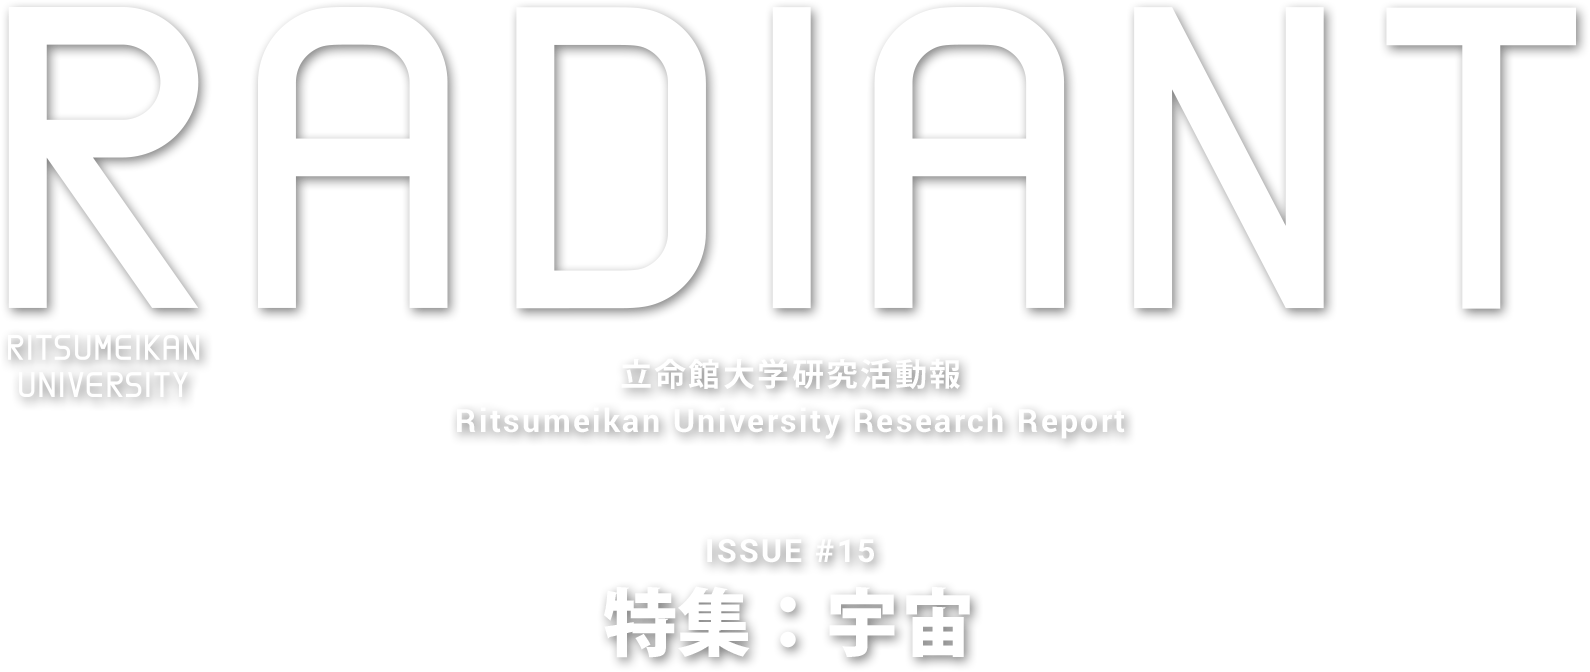 RADIANT 立命館大学研究活動報 Ritsumeikan University Research Report